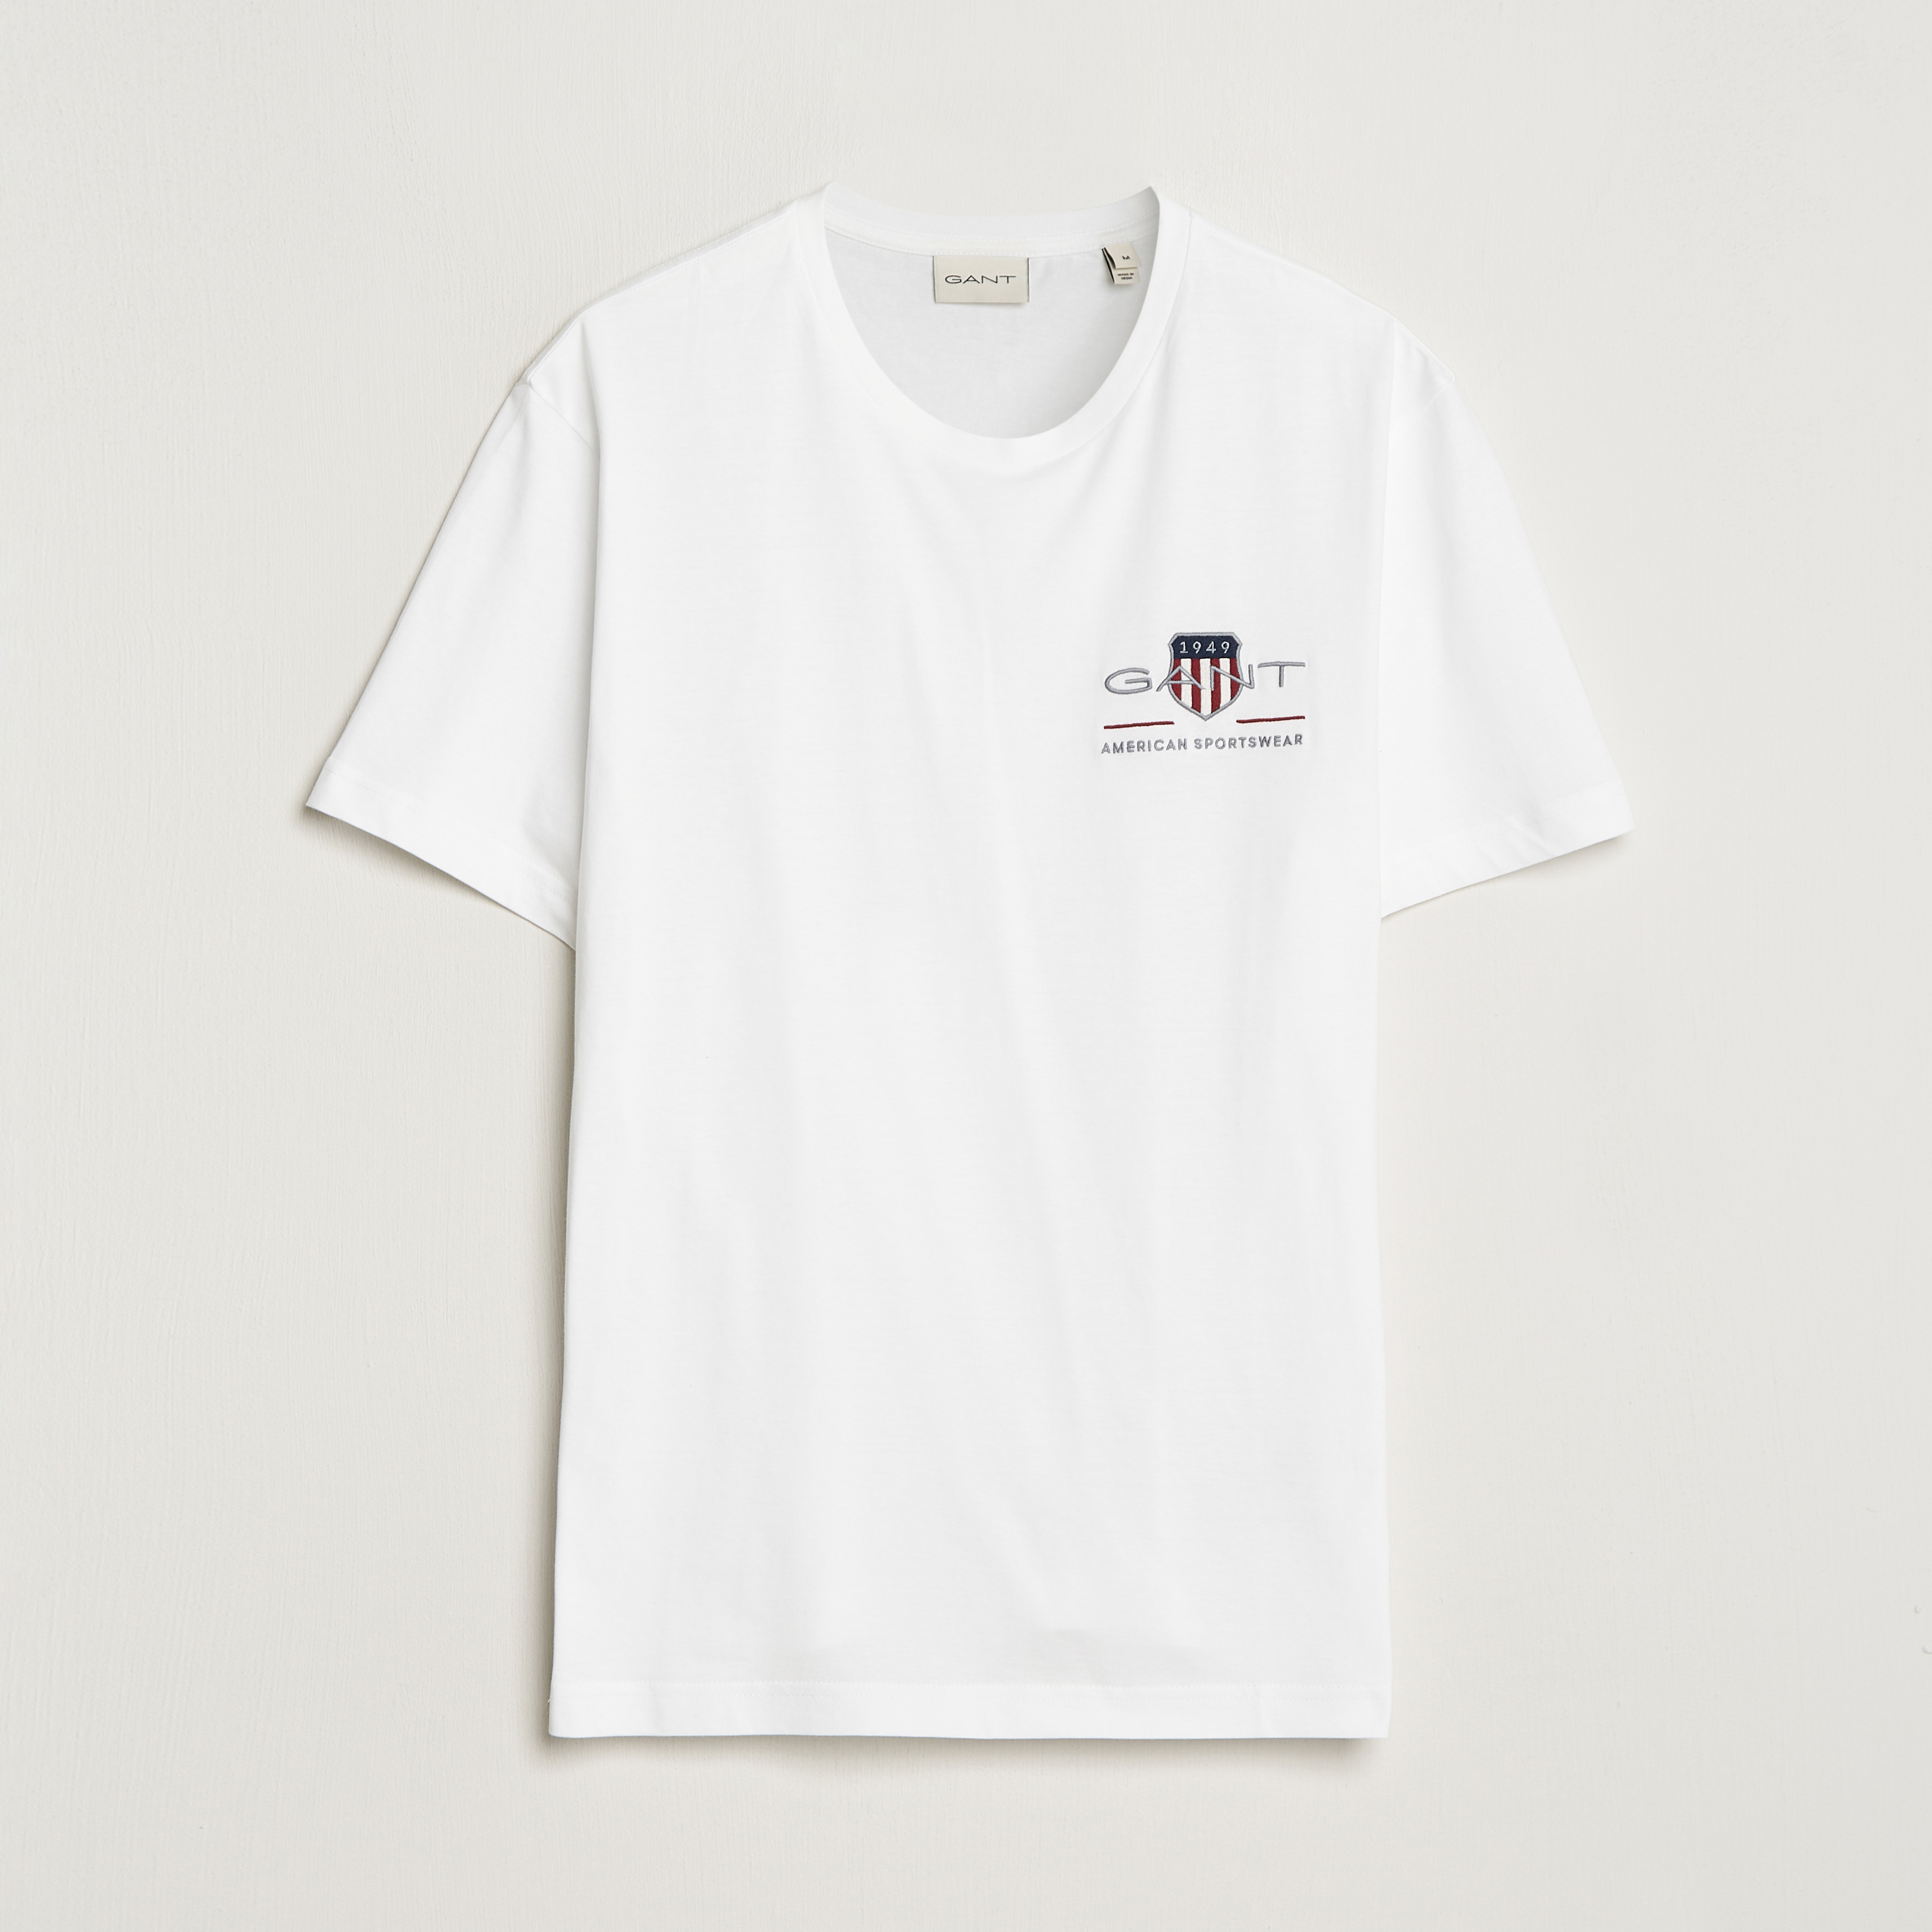 Shield GANT Logo Small at White Archive T-Shirt